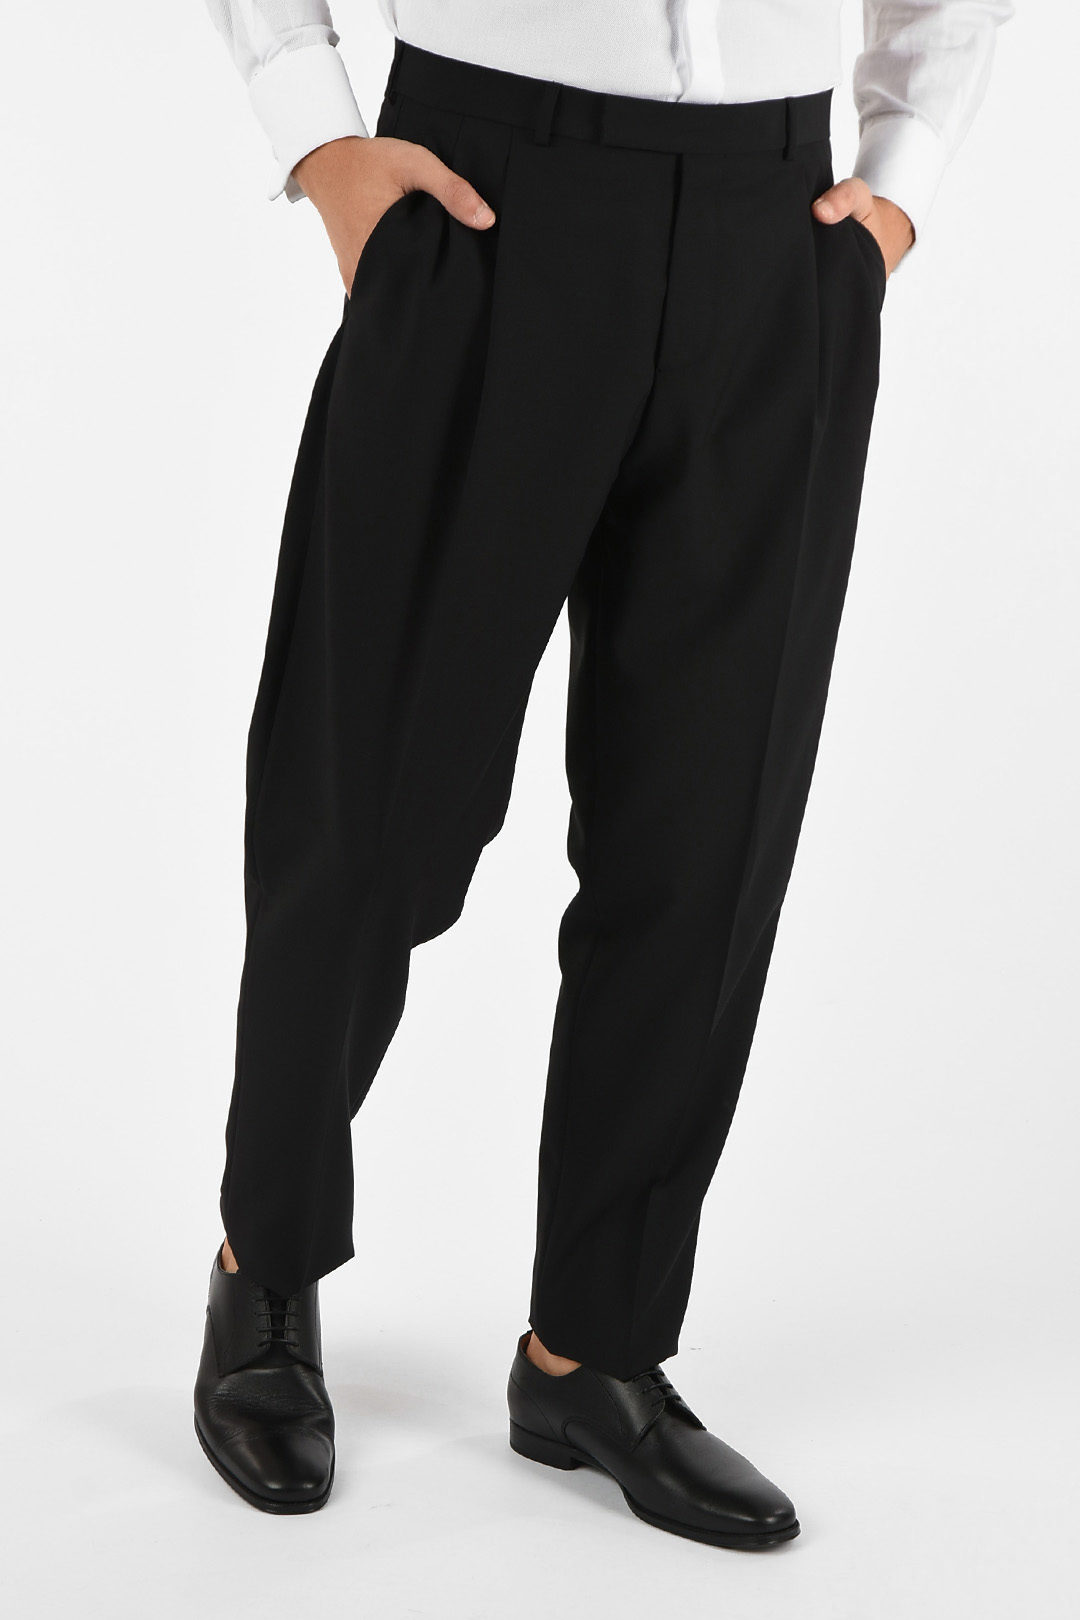 Dior Double Pleat Pants men - Glamood Outlet